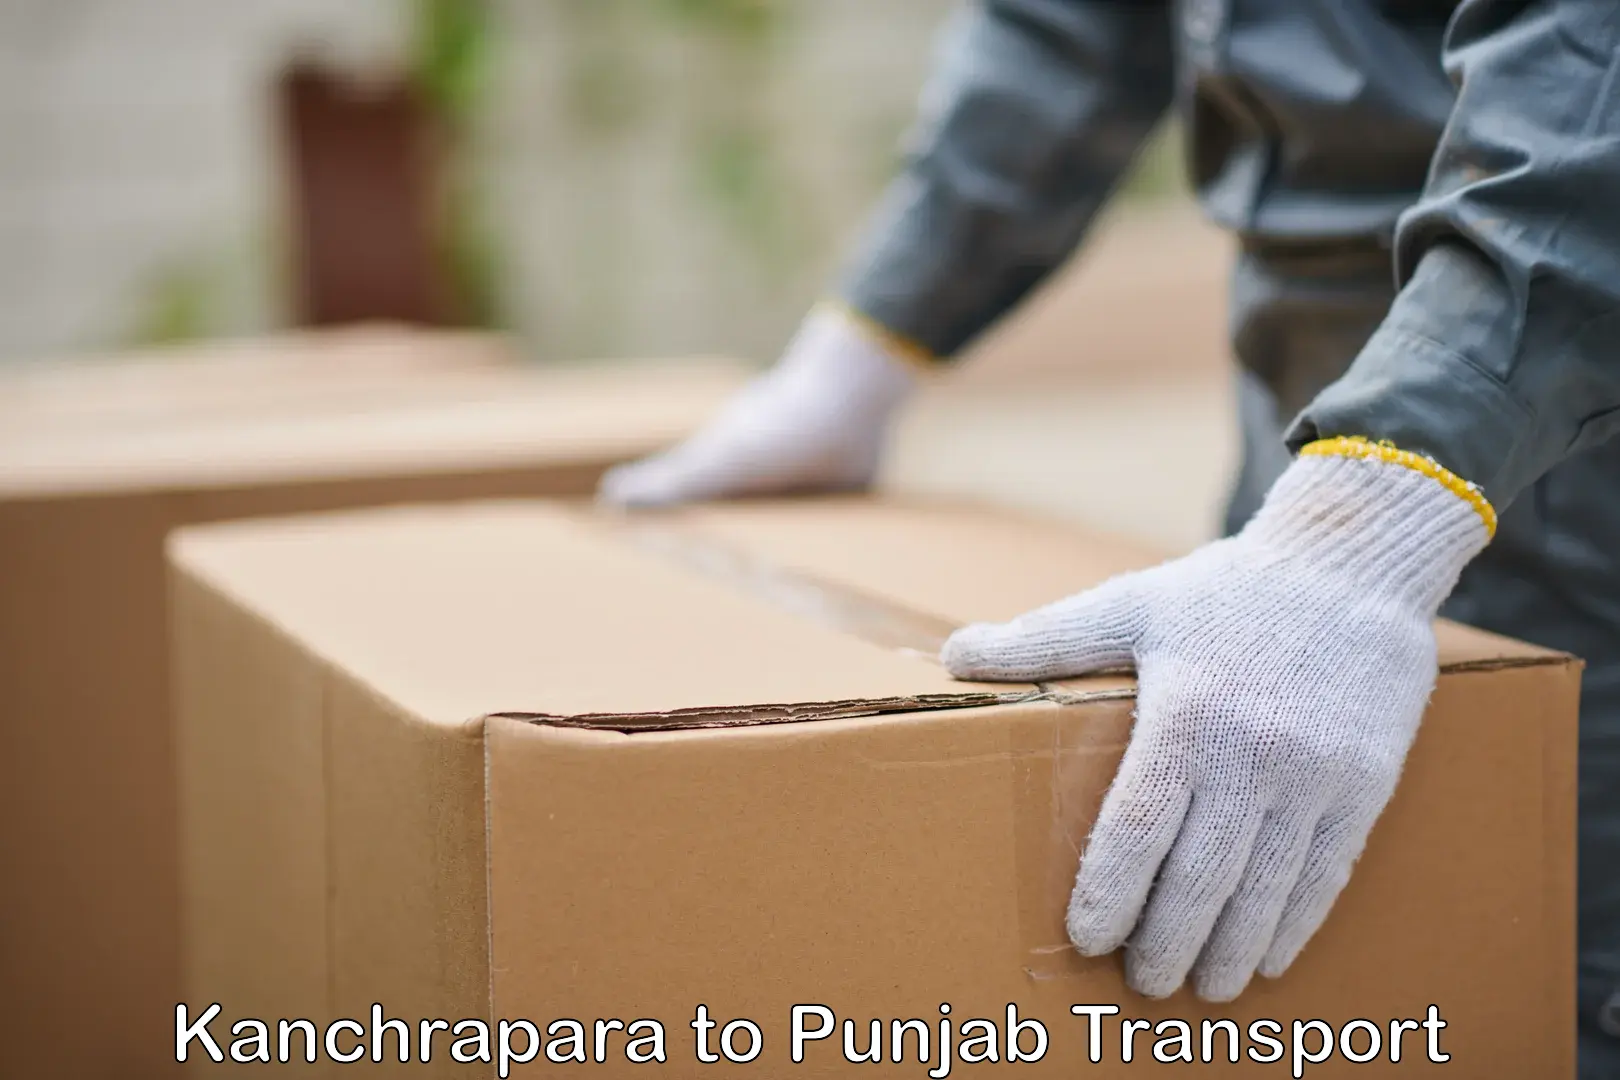 Parcel transport services Kanchrapara to Mohali